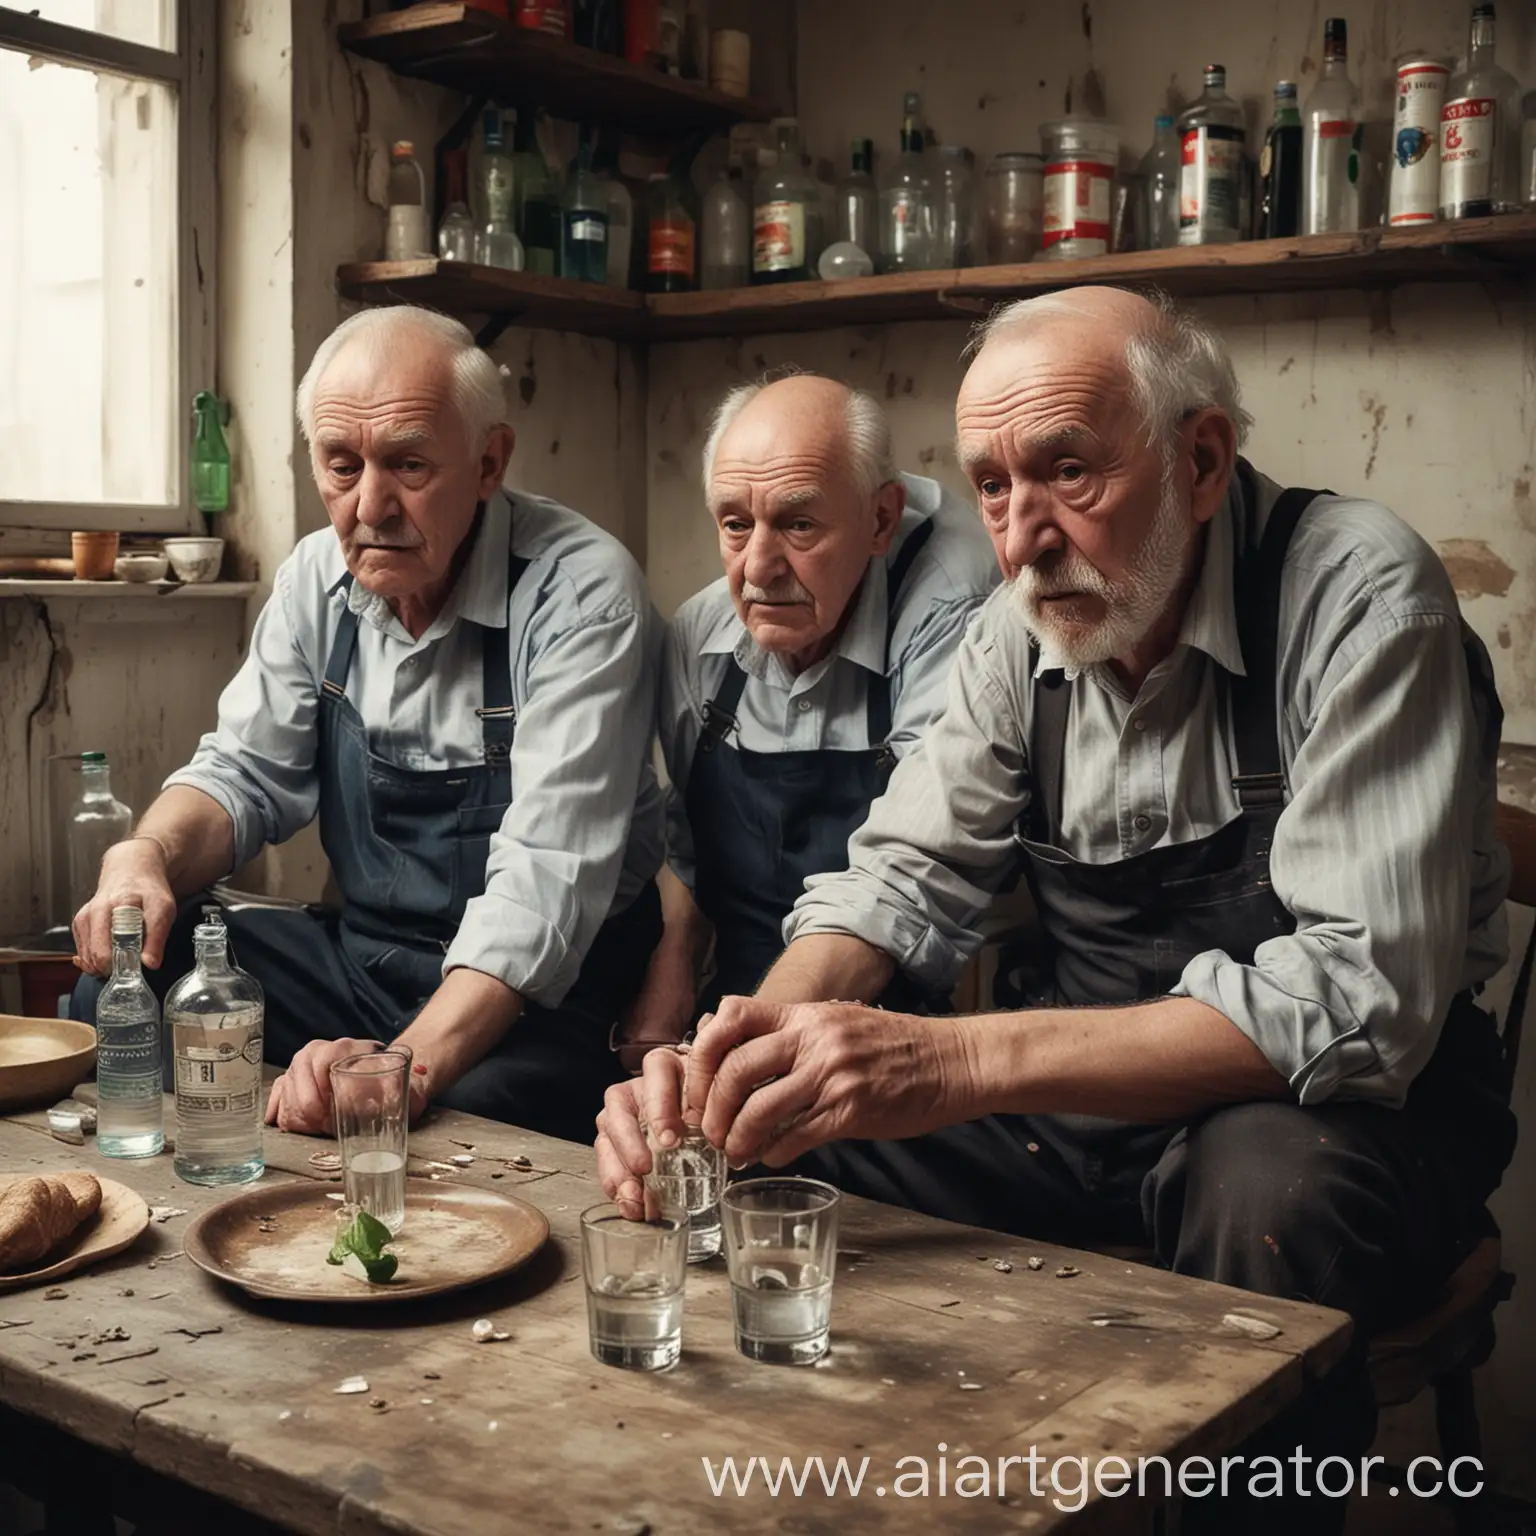 Elderly-Companions-Sharing-Vodka-in-a-Rustic-Kitchen